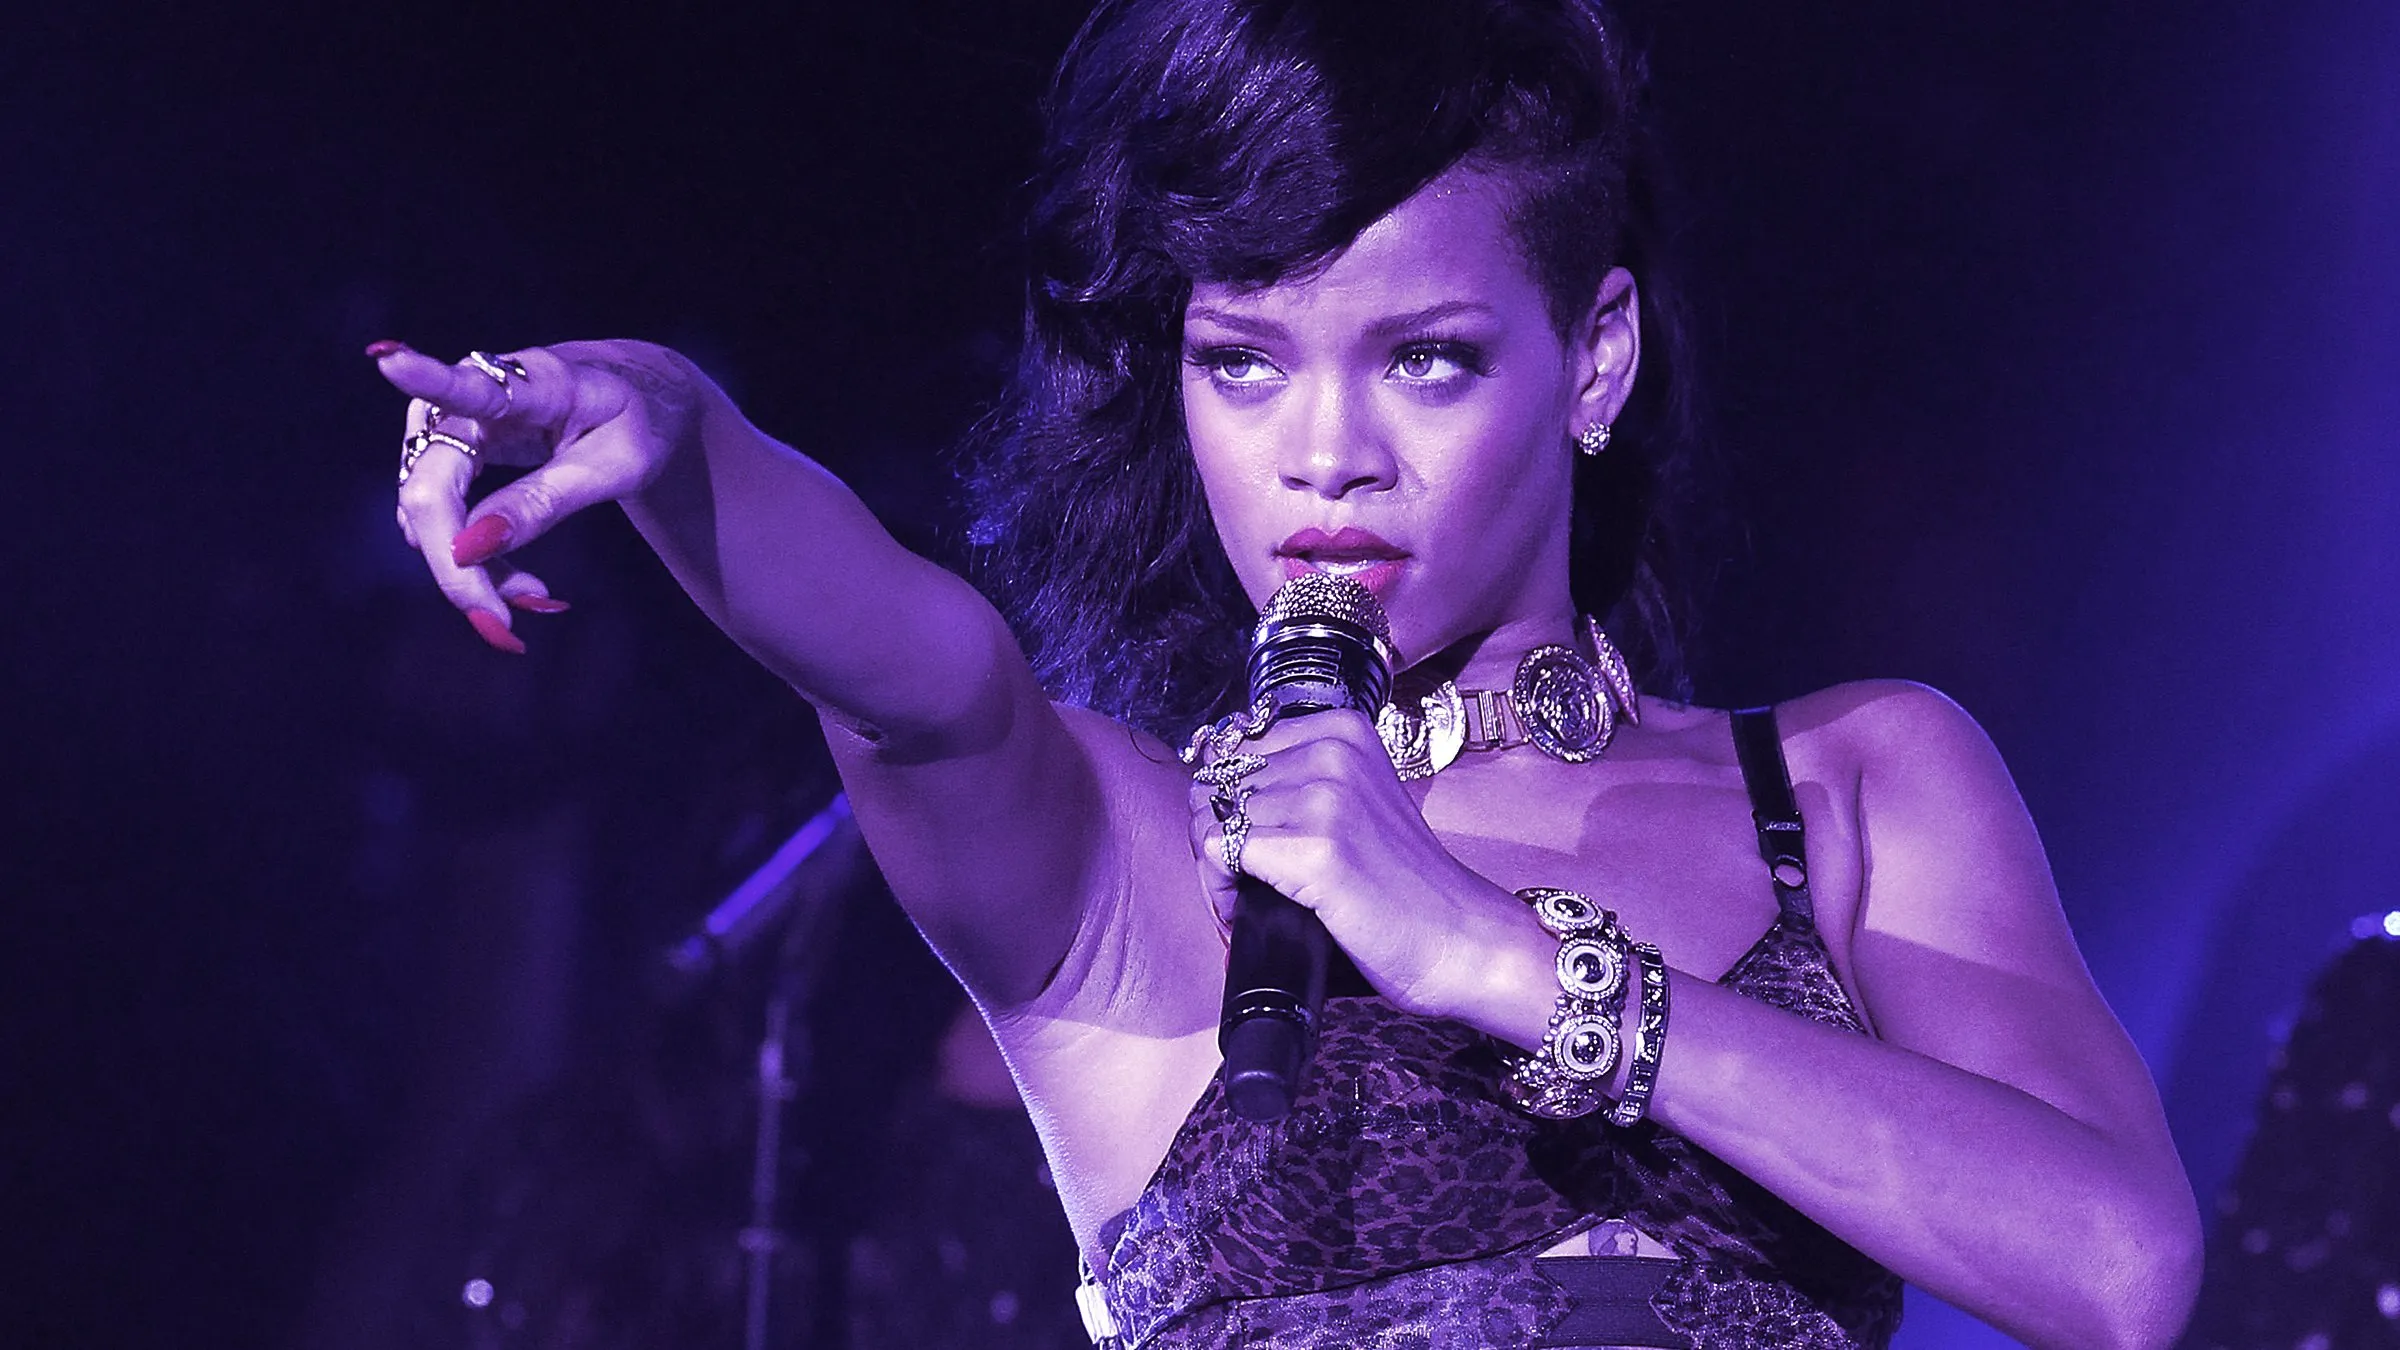 London, UK. Singer Rihanna performs her 777 secret gig tour at the HMV Forum in Kentish Town in London. Image: Shutterstock